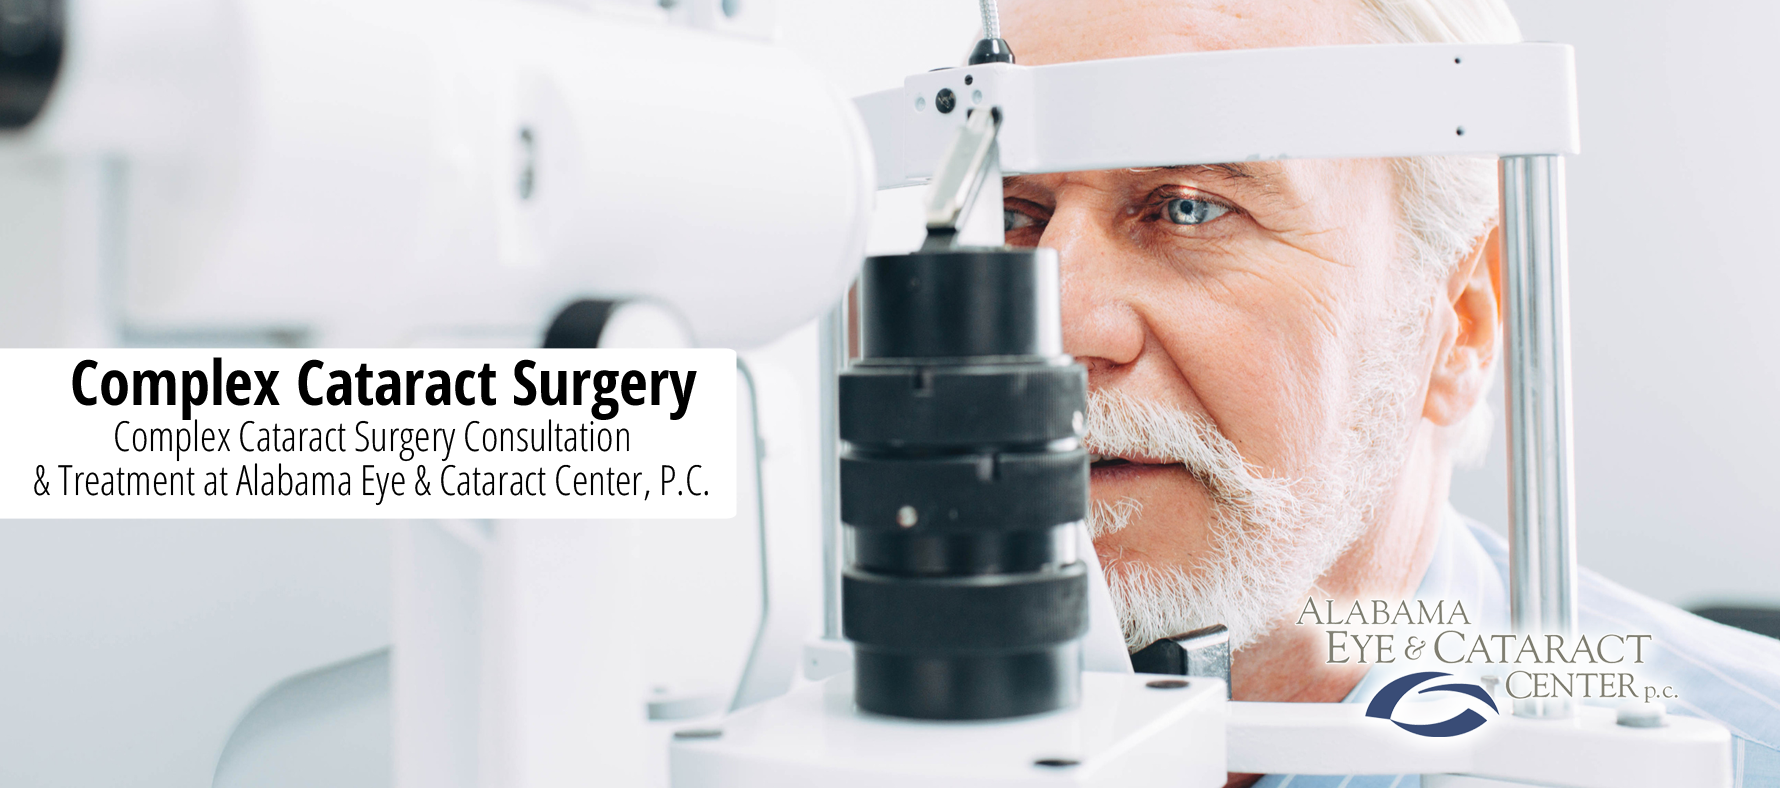 Complex Cataract Surgery Header Image